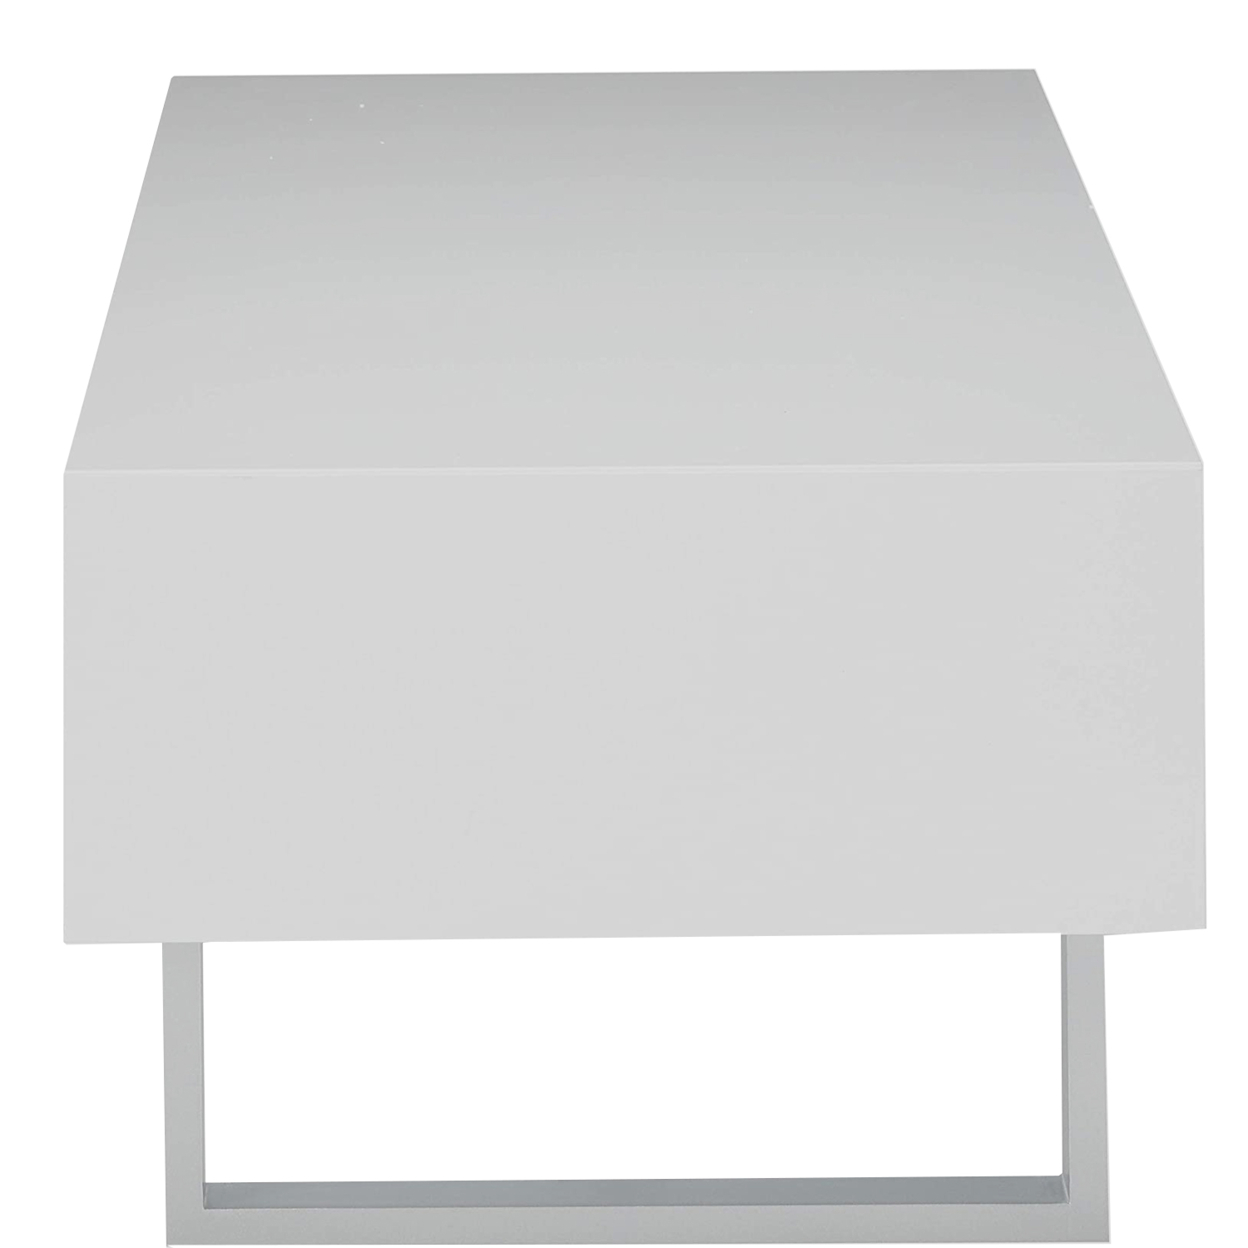 Contemporary Storage Coffee Table With Metallic Base, Glossy White- Saltoro Sherpi